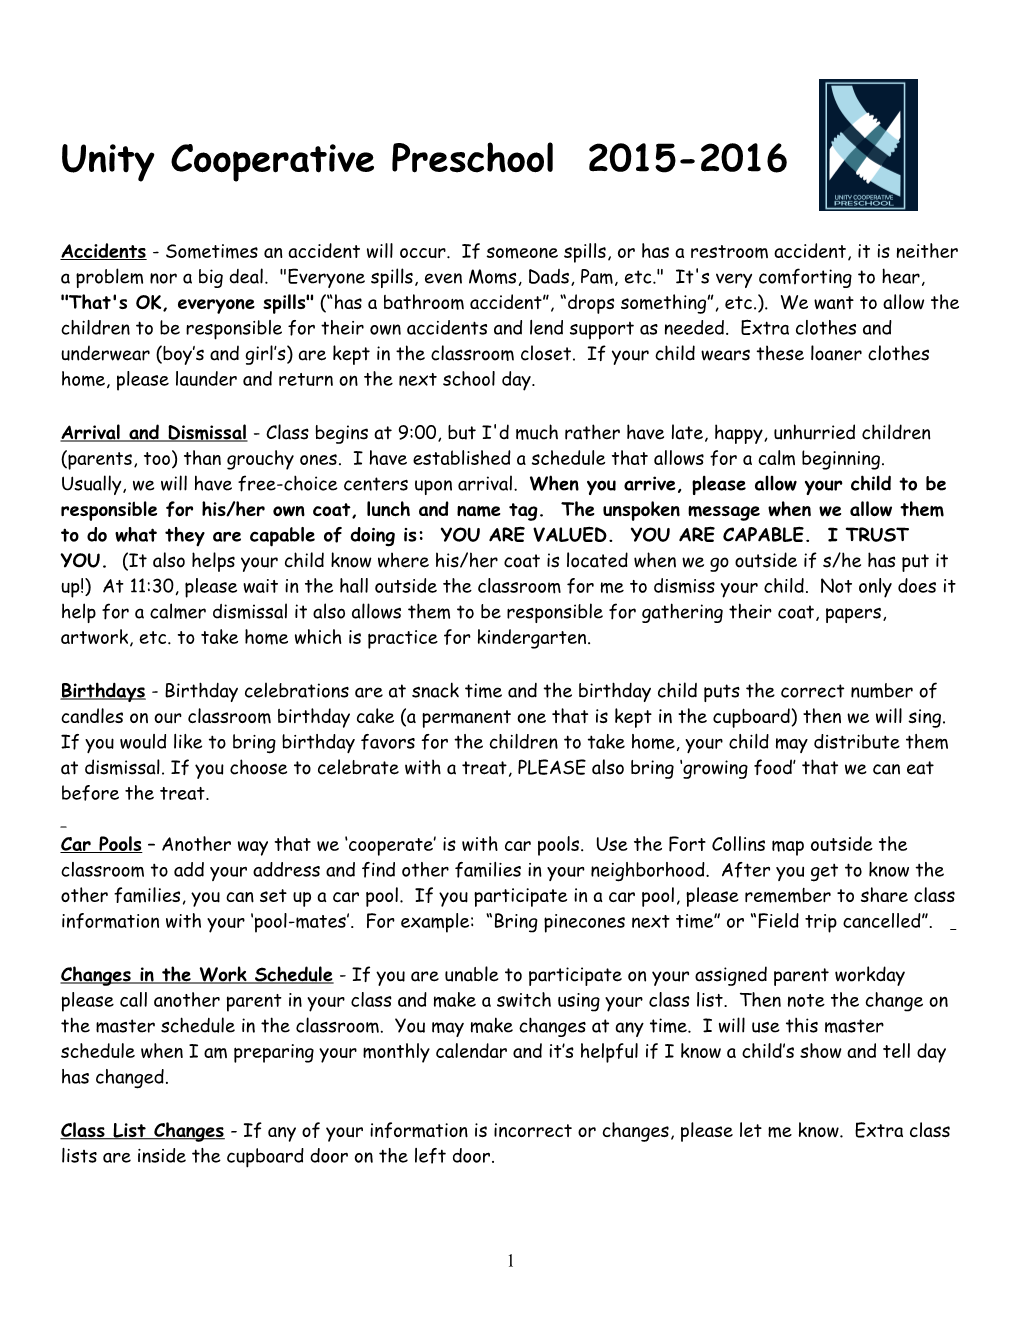 Unity Cooperative Preschool General Information 2005-06